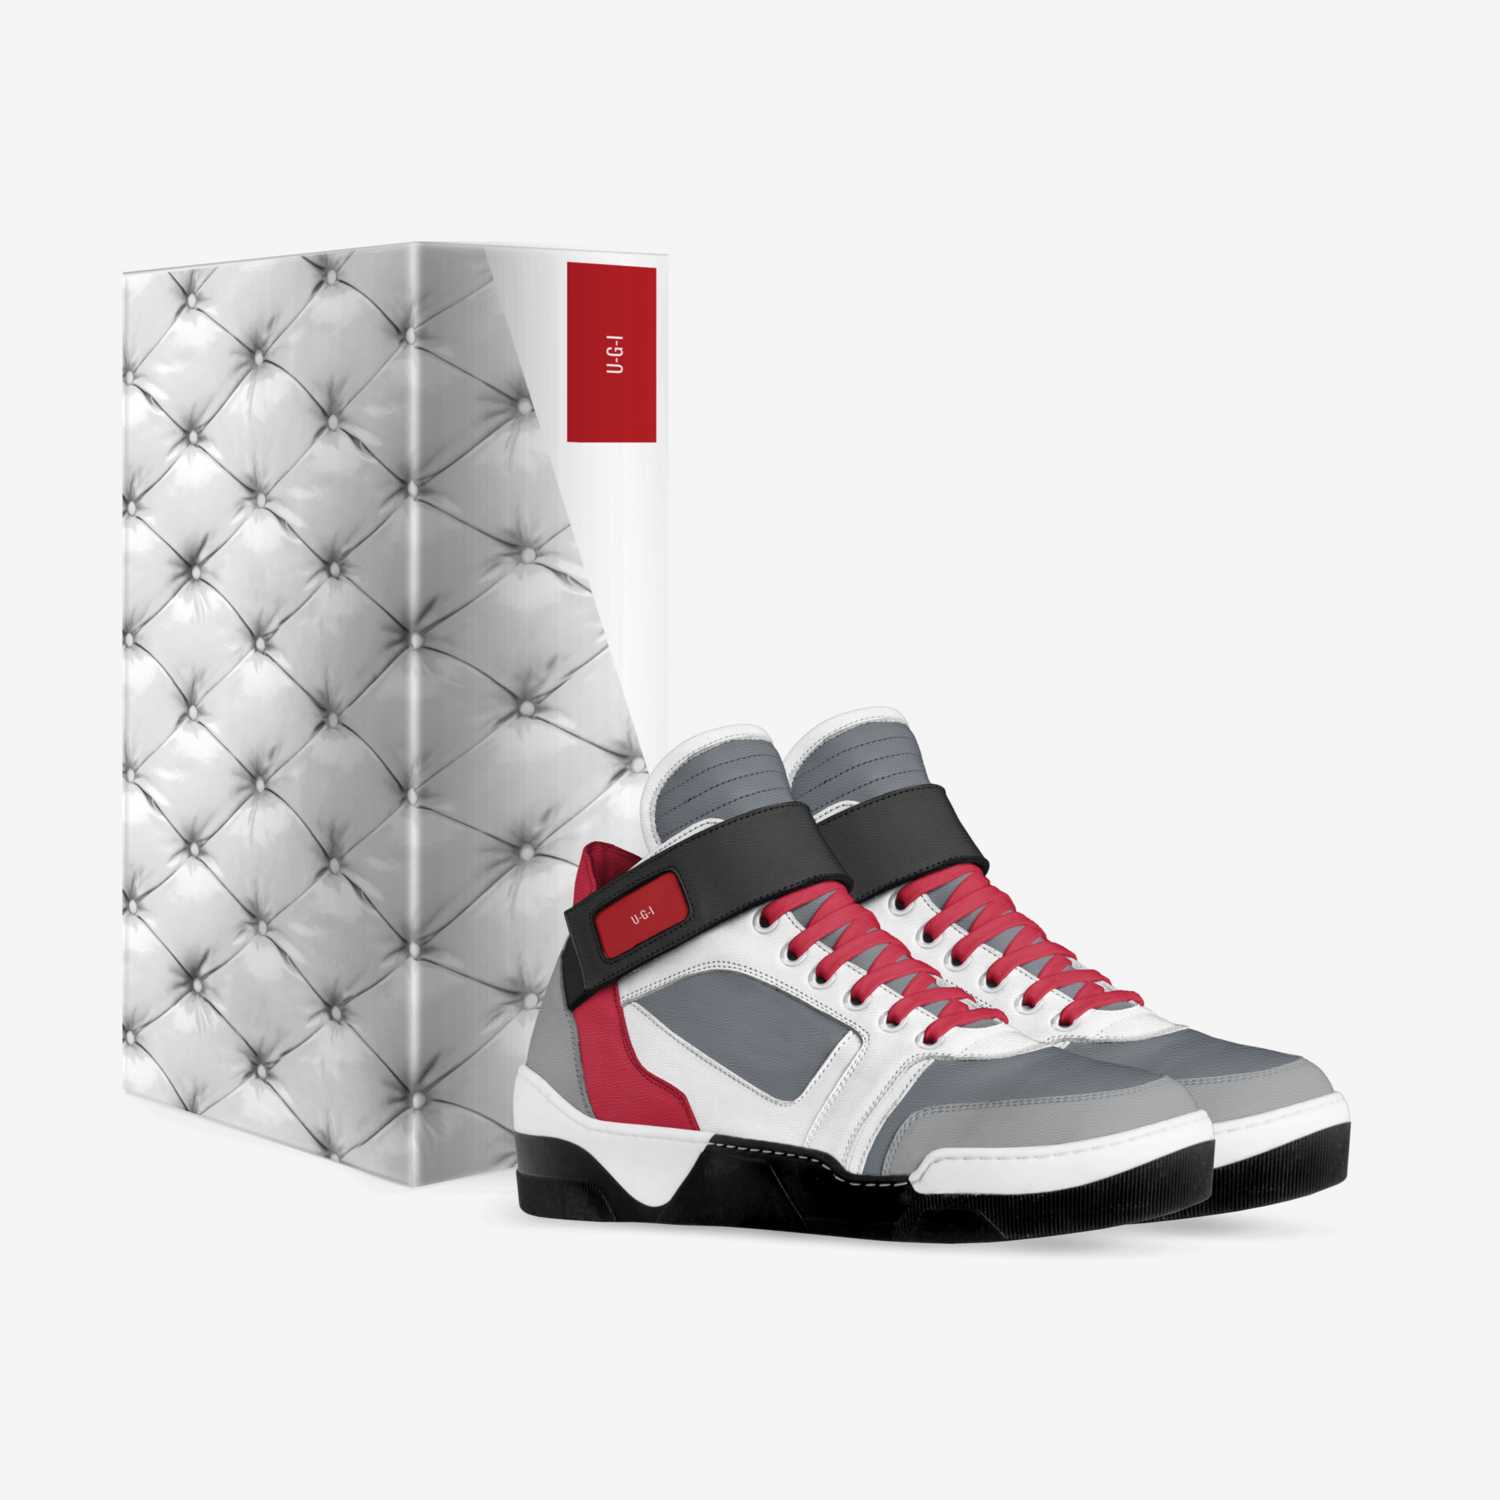 U-G-I custom made in Italy shoes by Rodrick Love | Box view